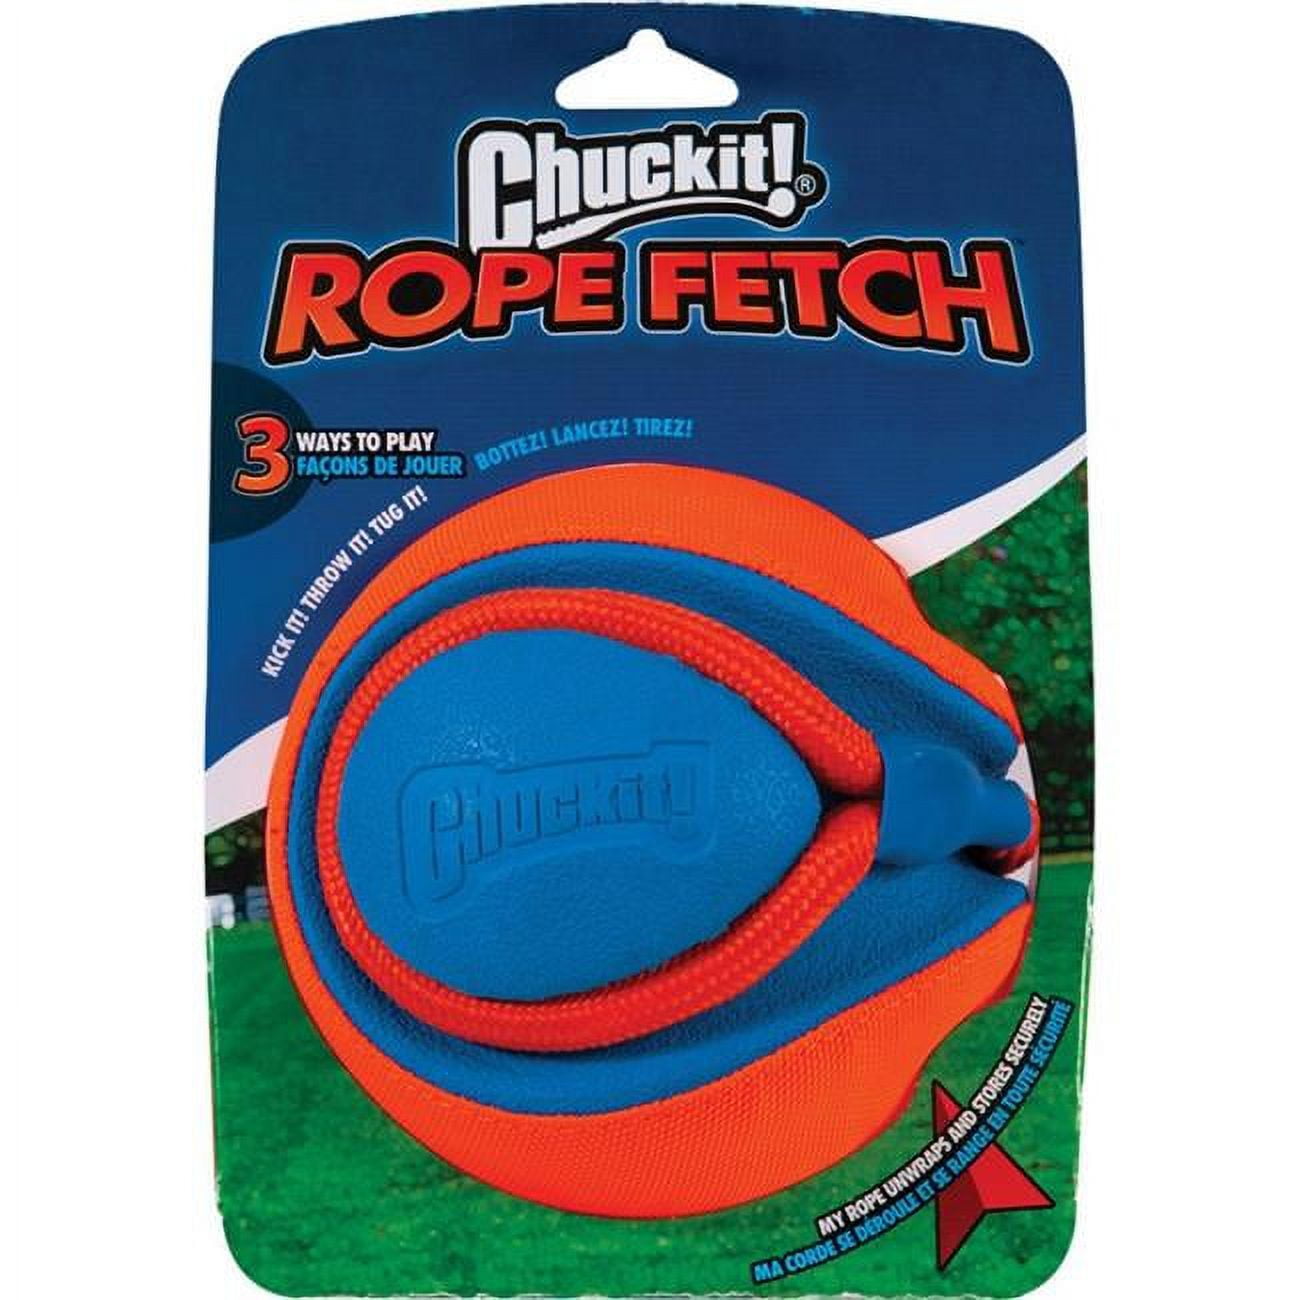 Chuckit Rope Fetch - Orange -  32220